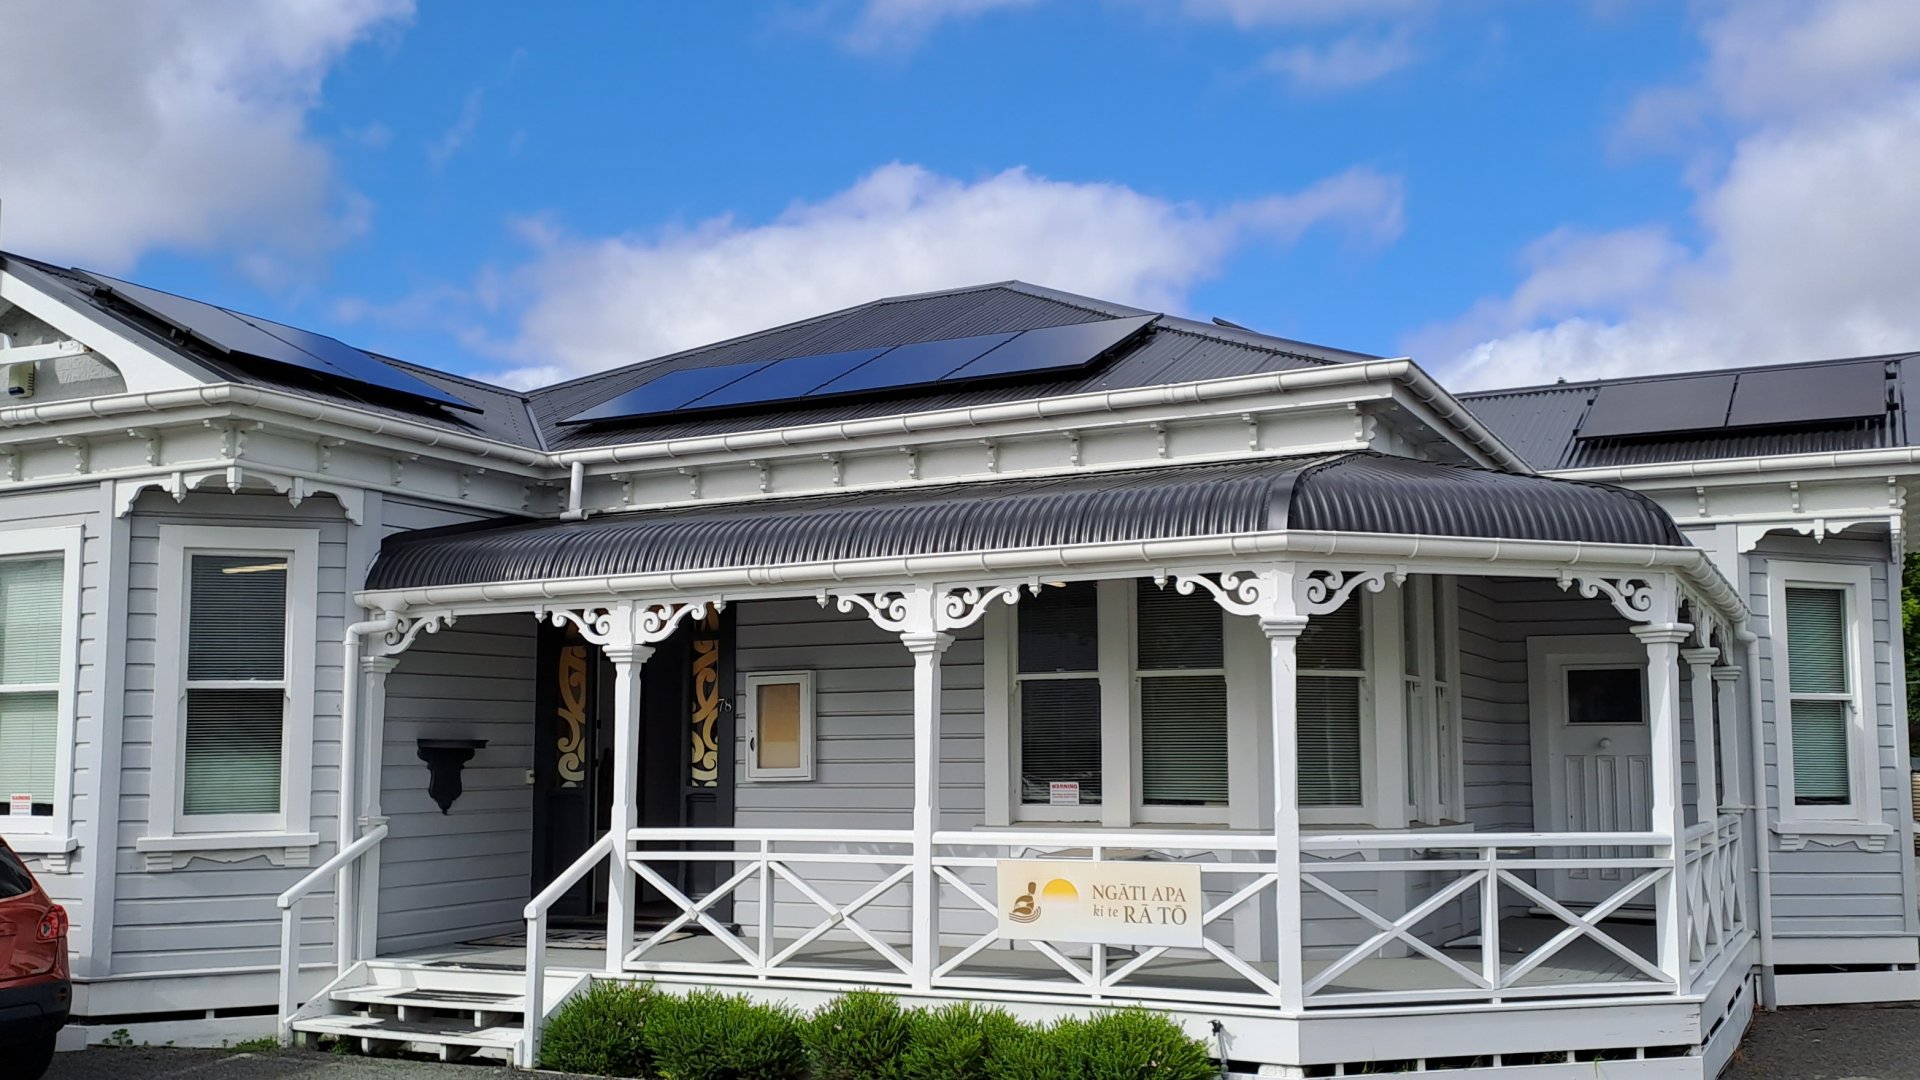 Solar panels at the Ngāti Apa ki te Rā Tō office demonstrate a commitment to reducing emissions